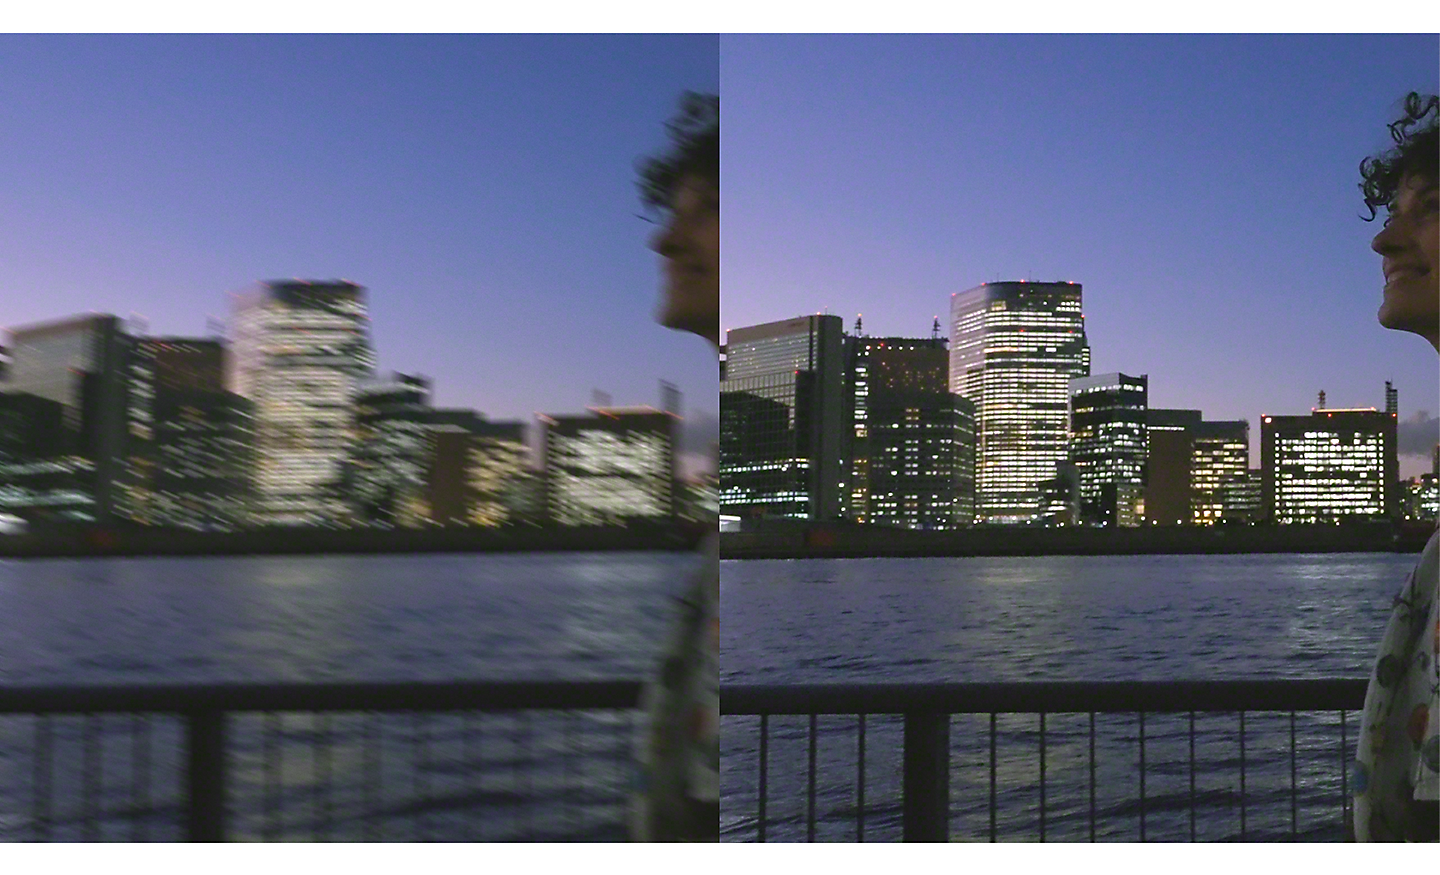 Dvojna slika obrisa mesta ponoči – slika na levi je zamegljena, slika na vrhu je ostra